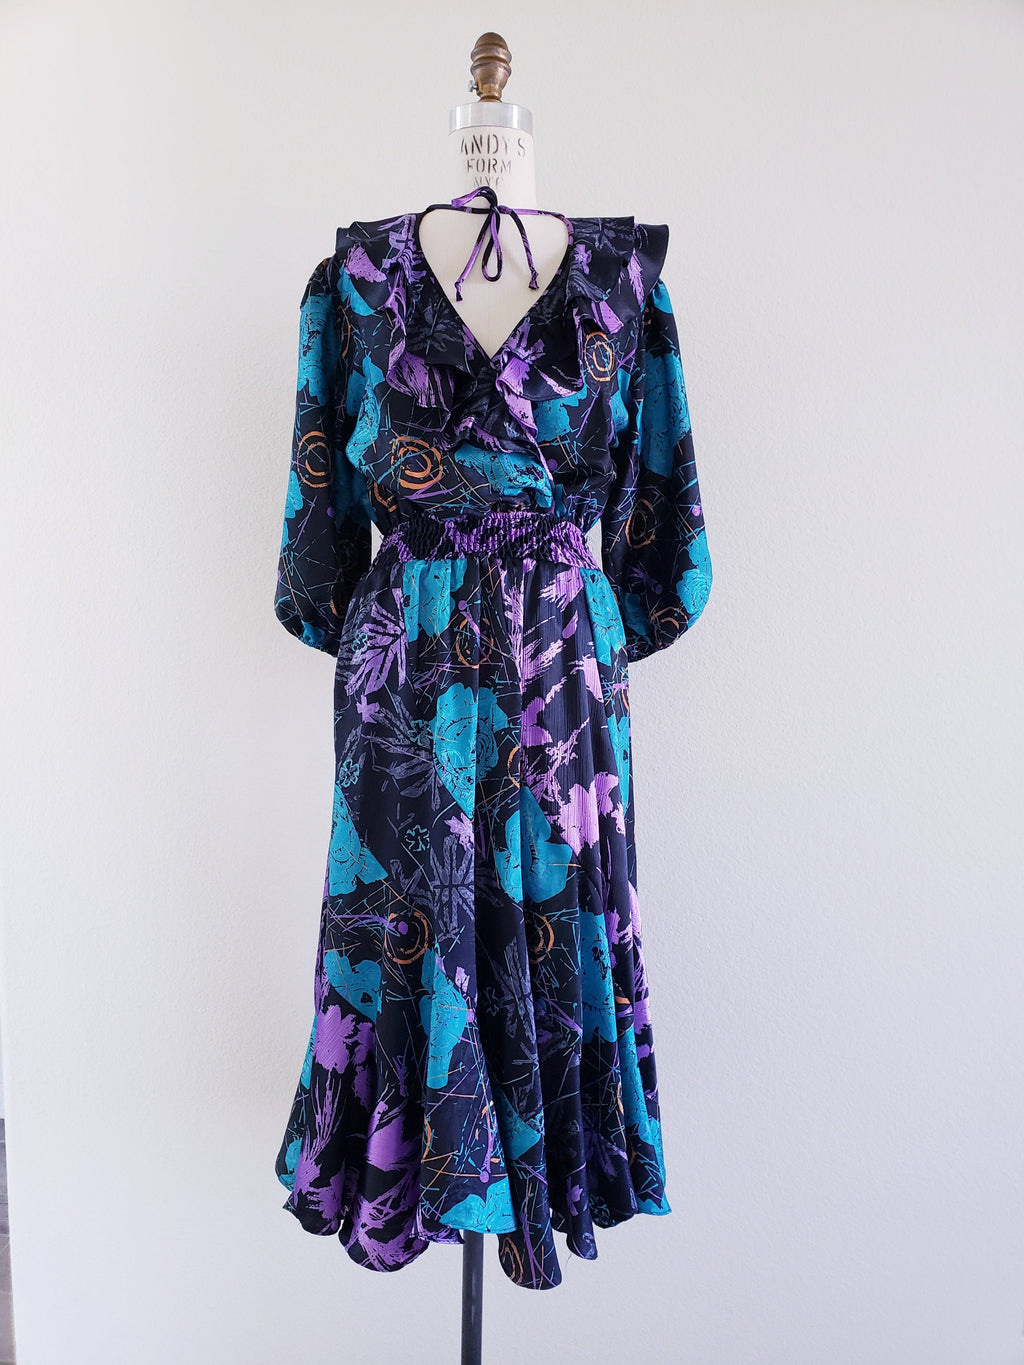 Vintage Susan Freis Assorti 80s Dress - ChicCityVintage